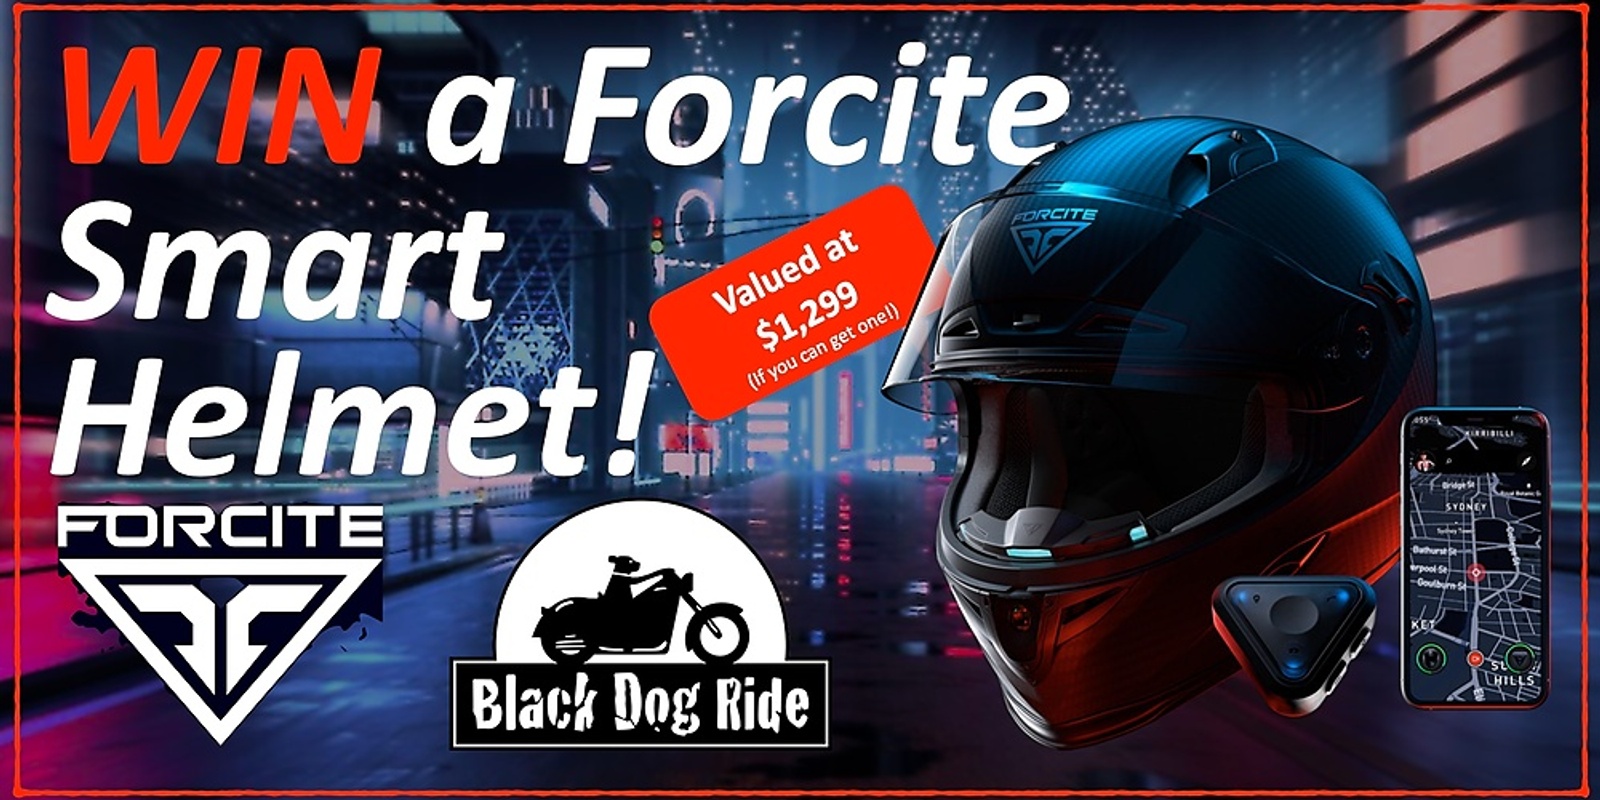 Banner image for WIN a Forcite Smart Helmet!